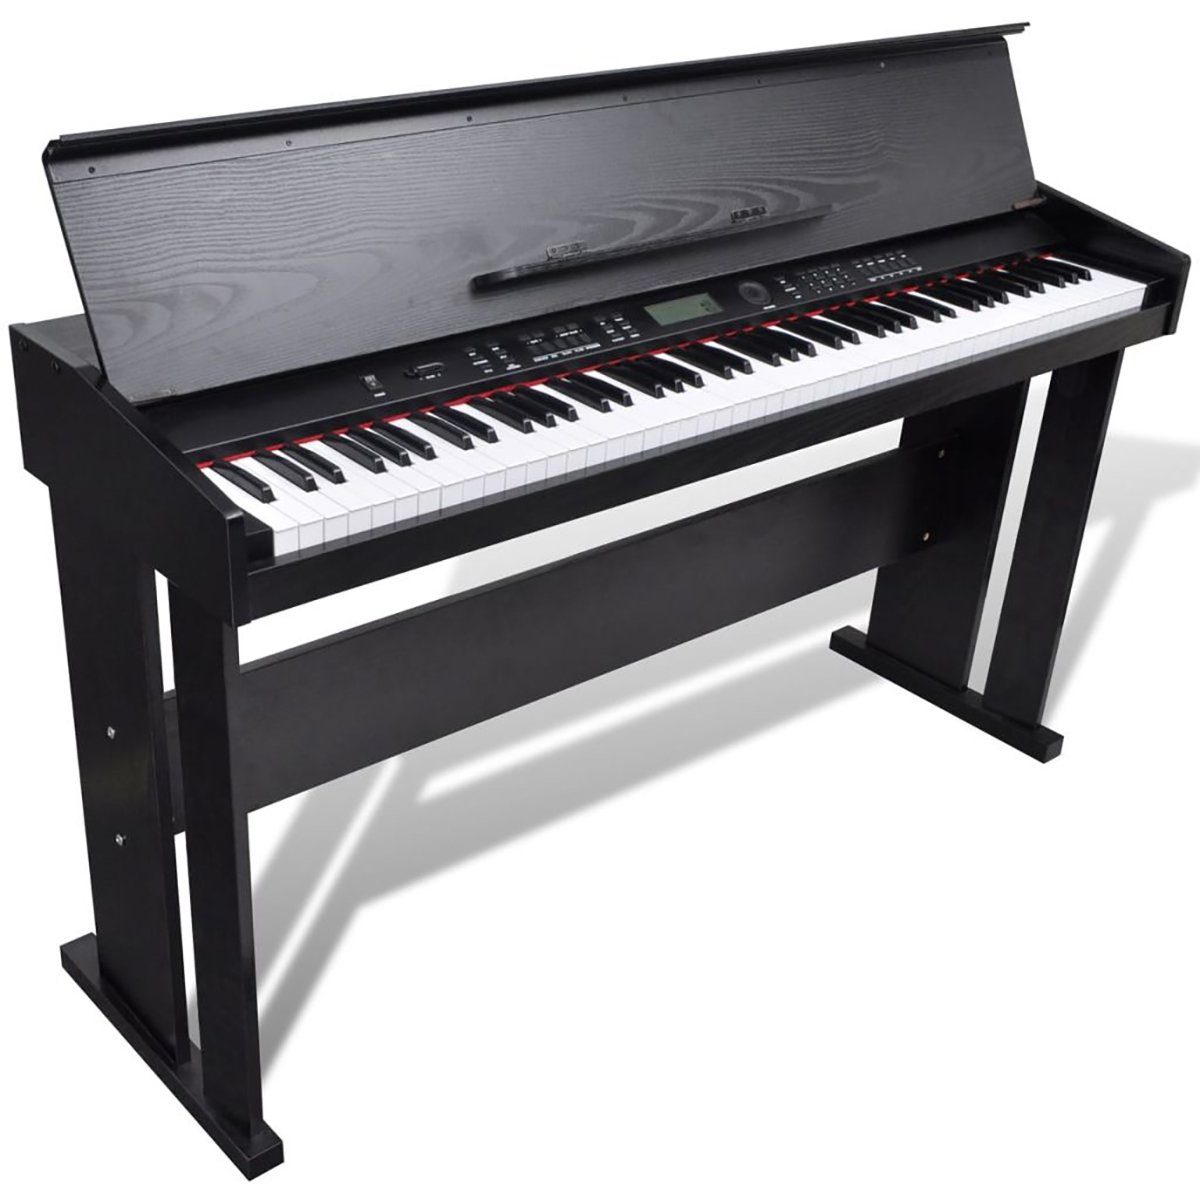 DOTMALL Klavier Elektronisches Klavier/Digitalpiano mit 88 Tasten & Notenständer